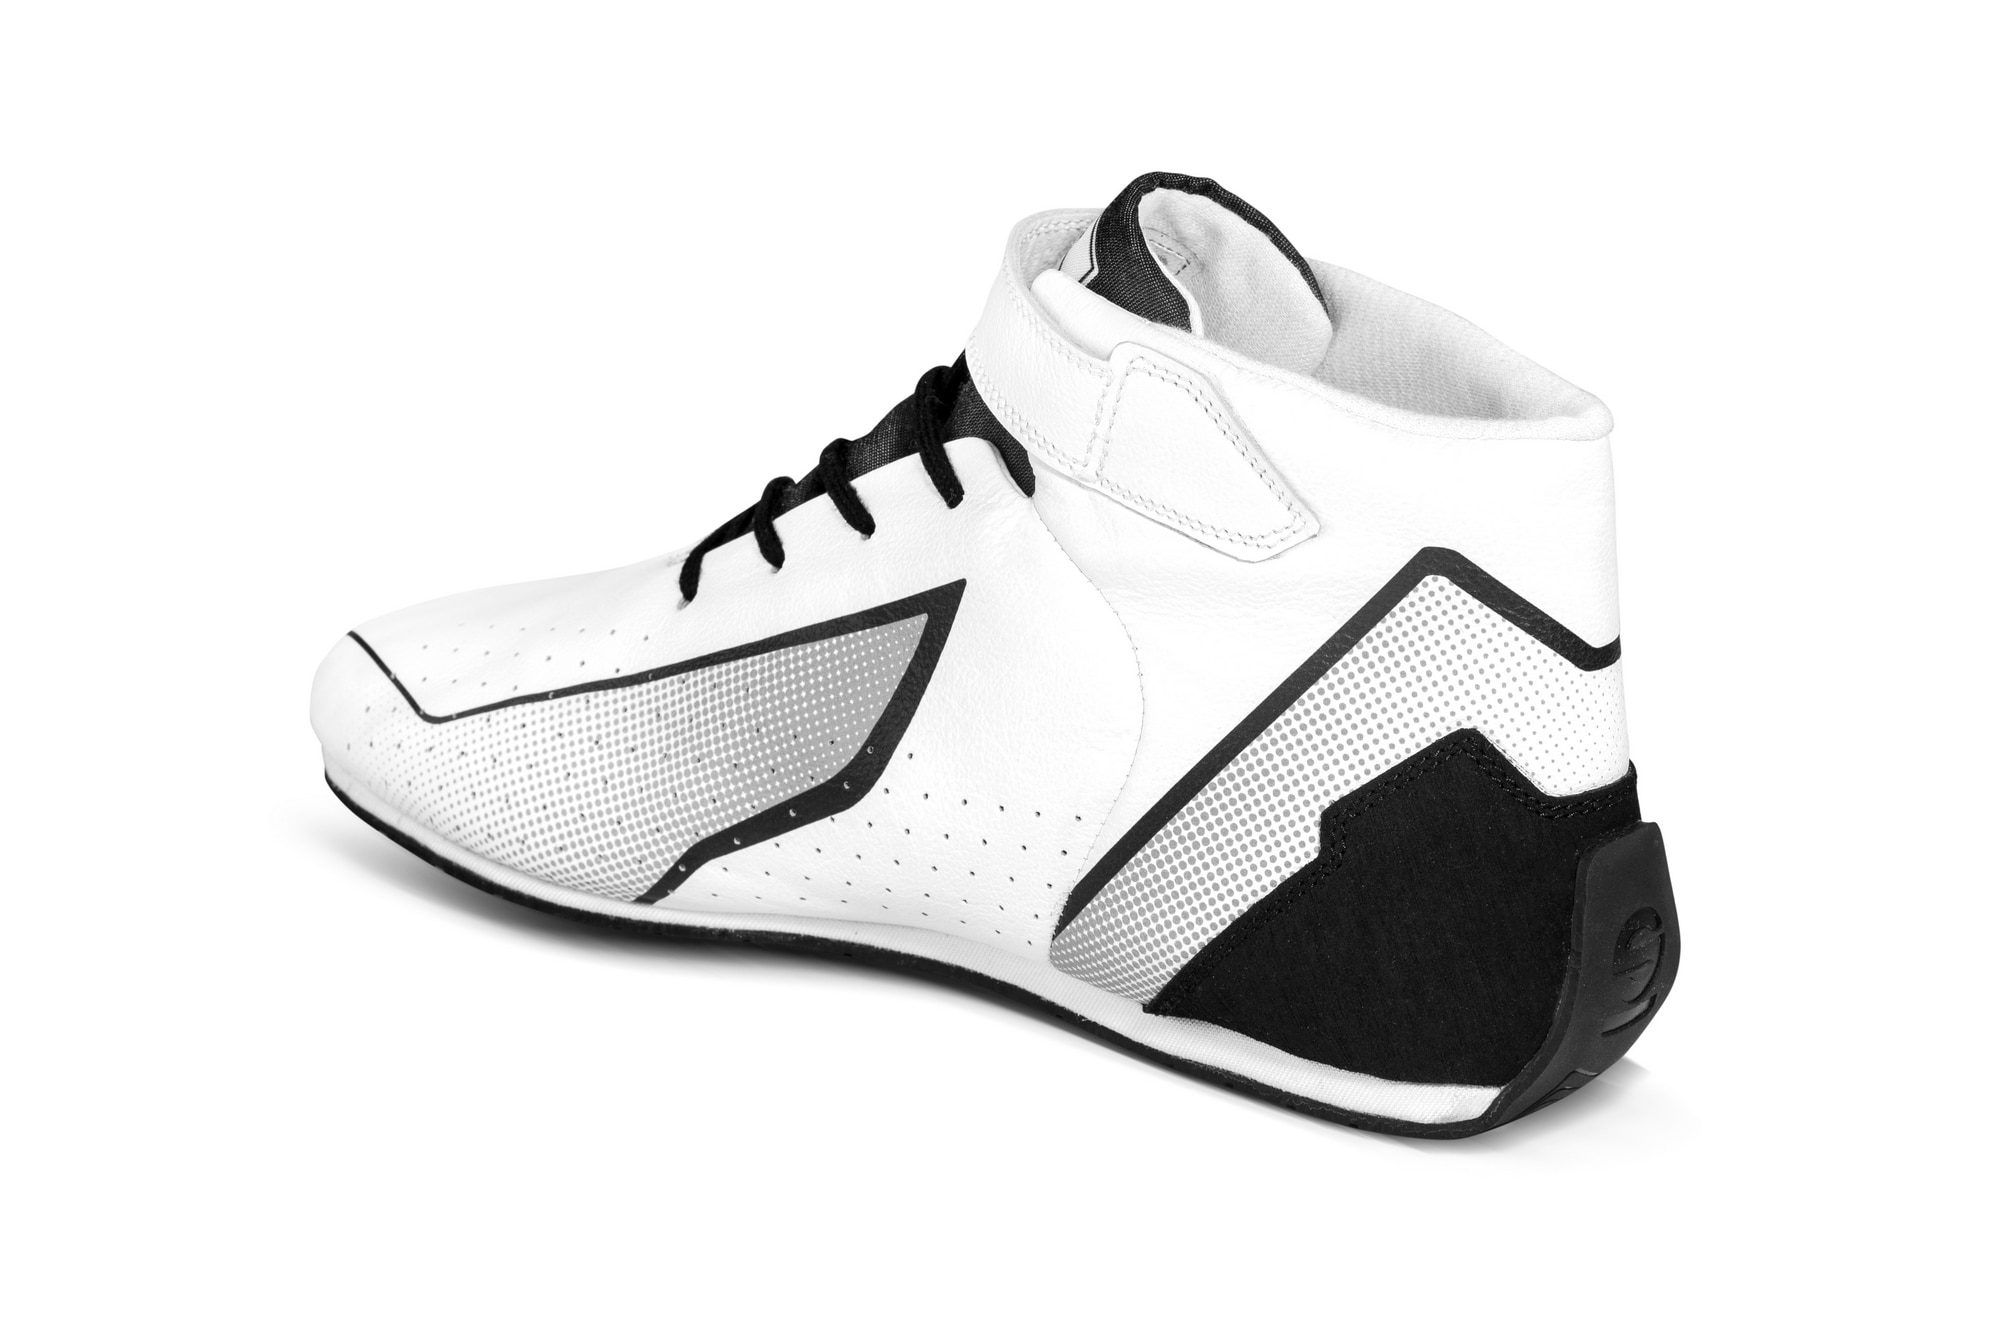 Shoe Sparco Prime R